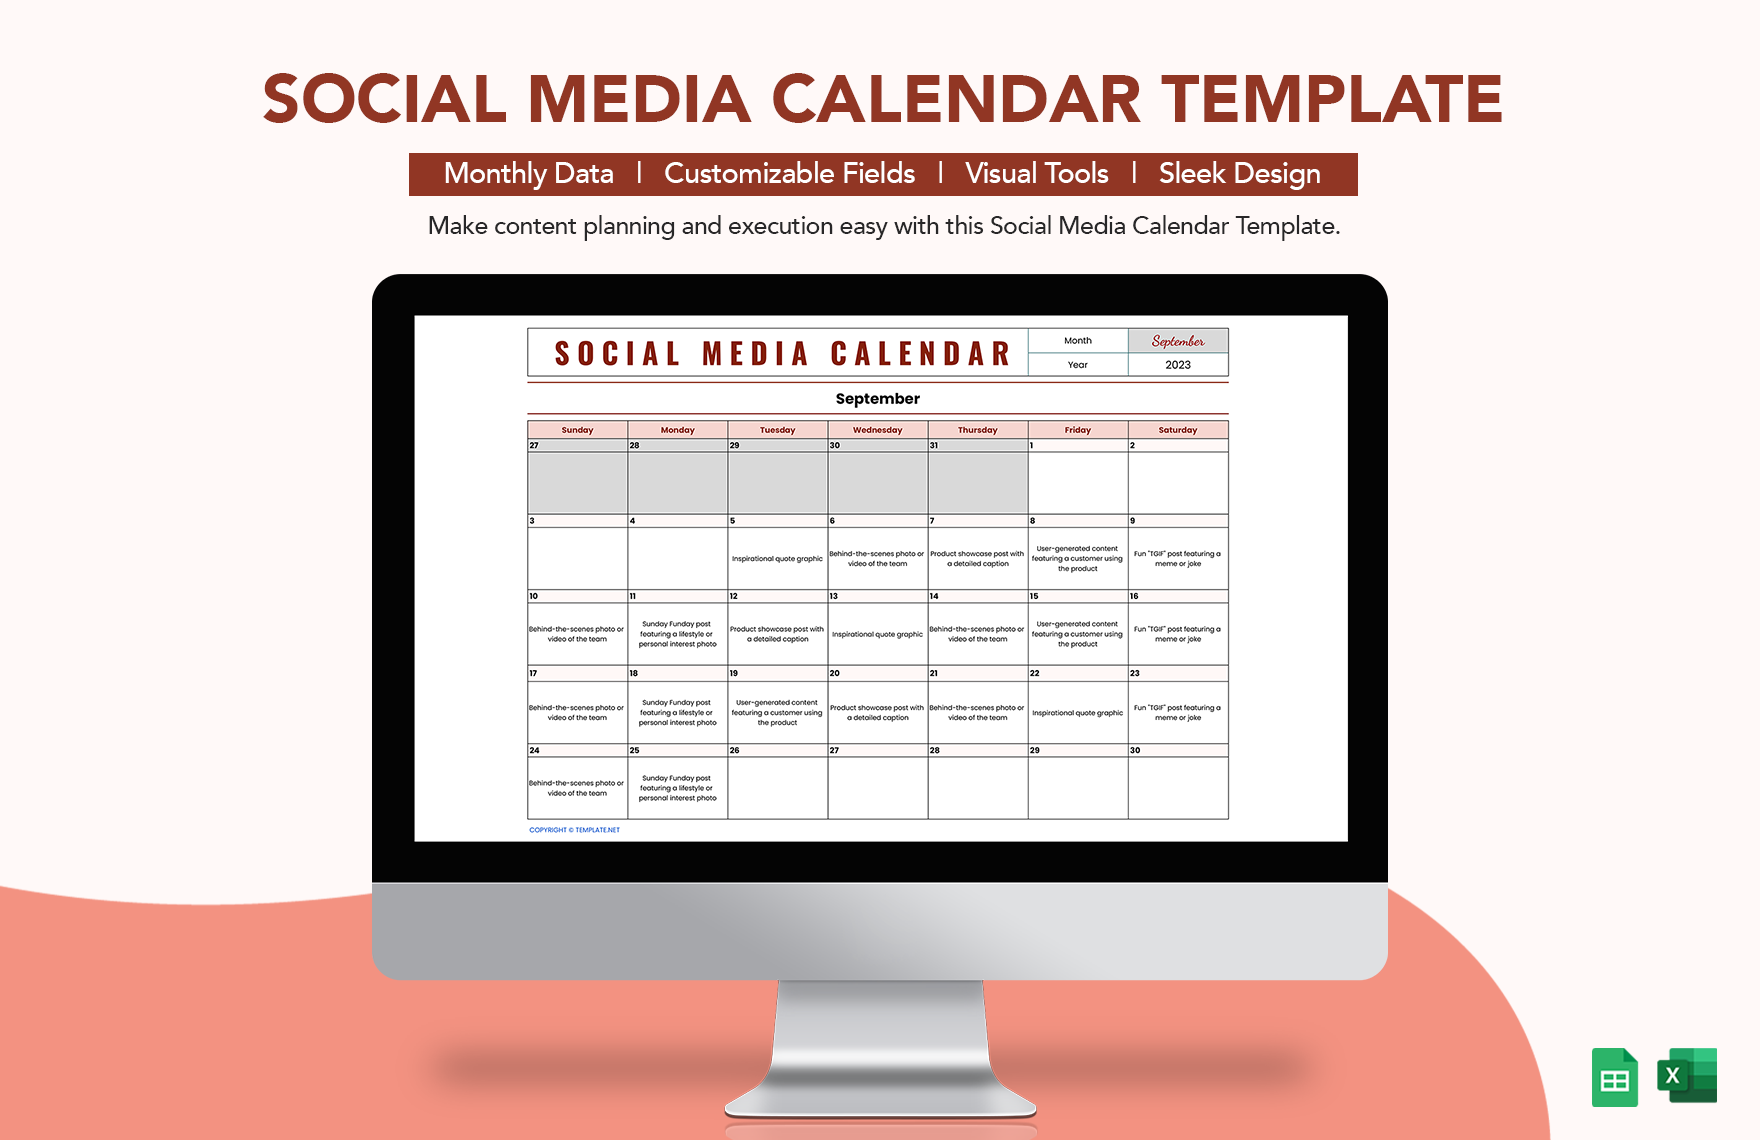 Social Media Calendar Template Download in Word, Google Docs, PDF